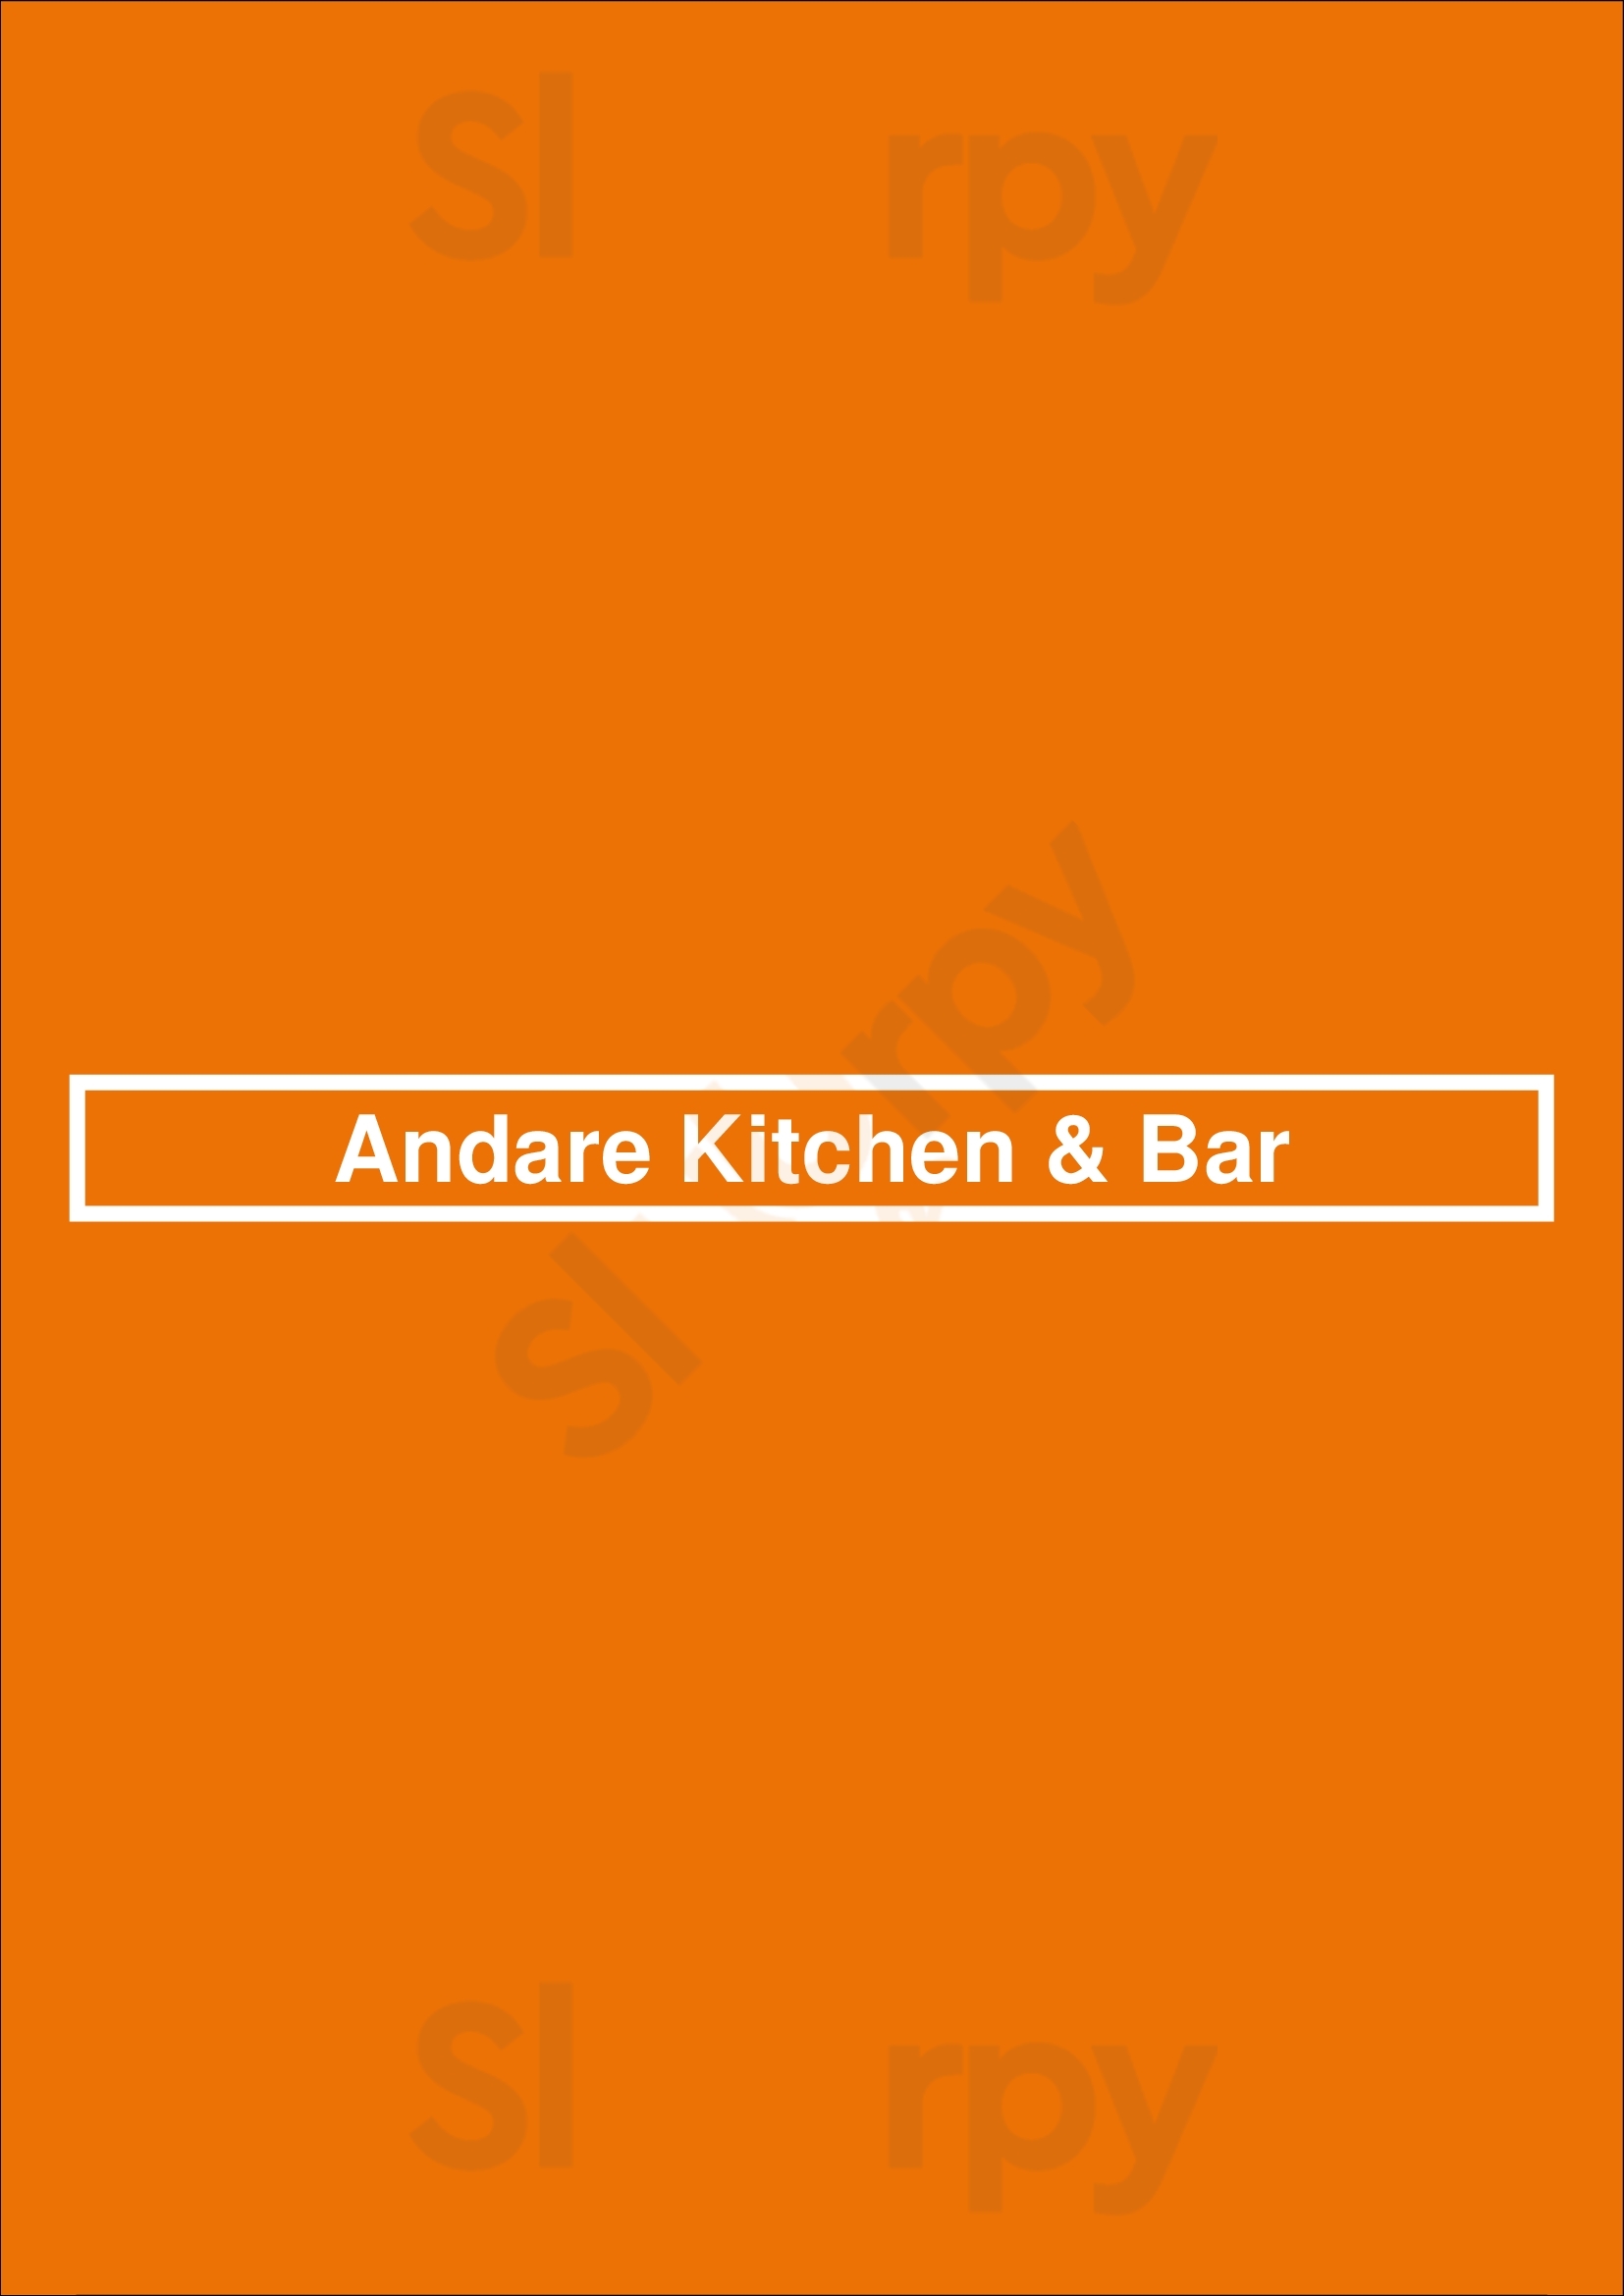 Andare Kitchen & Bar Seattle Menu - 1